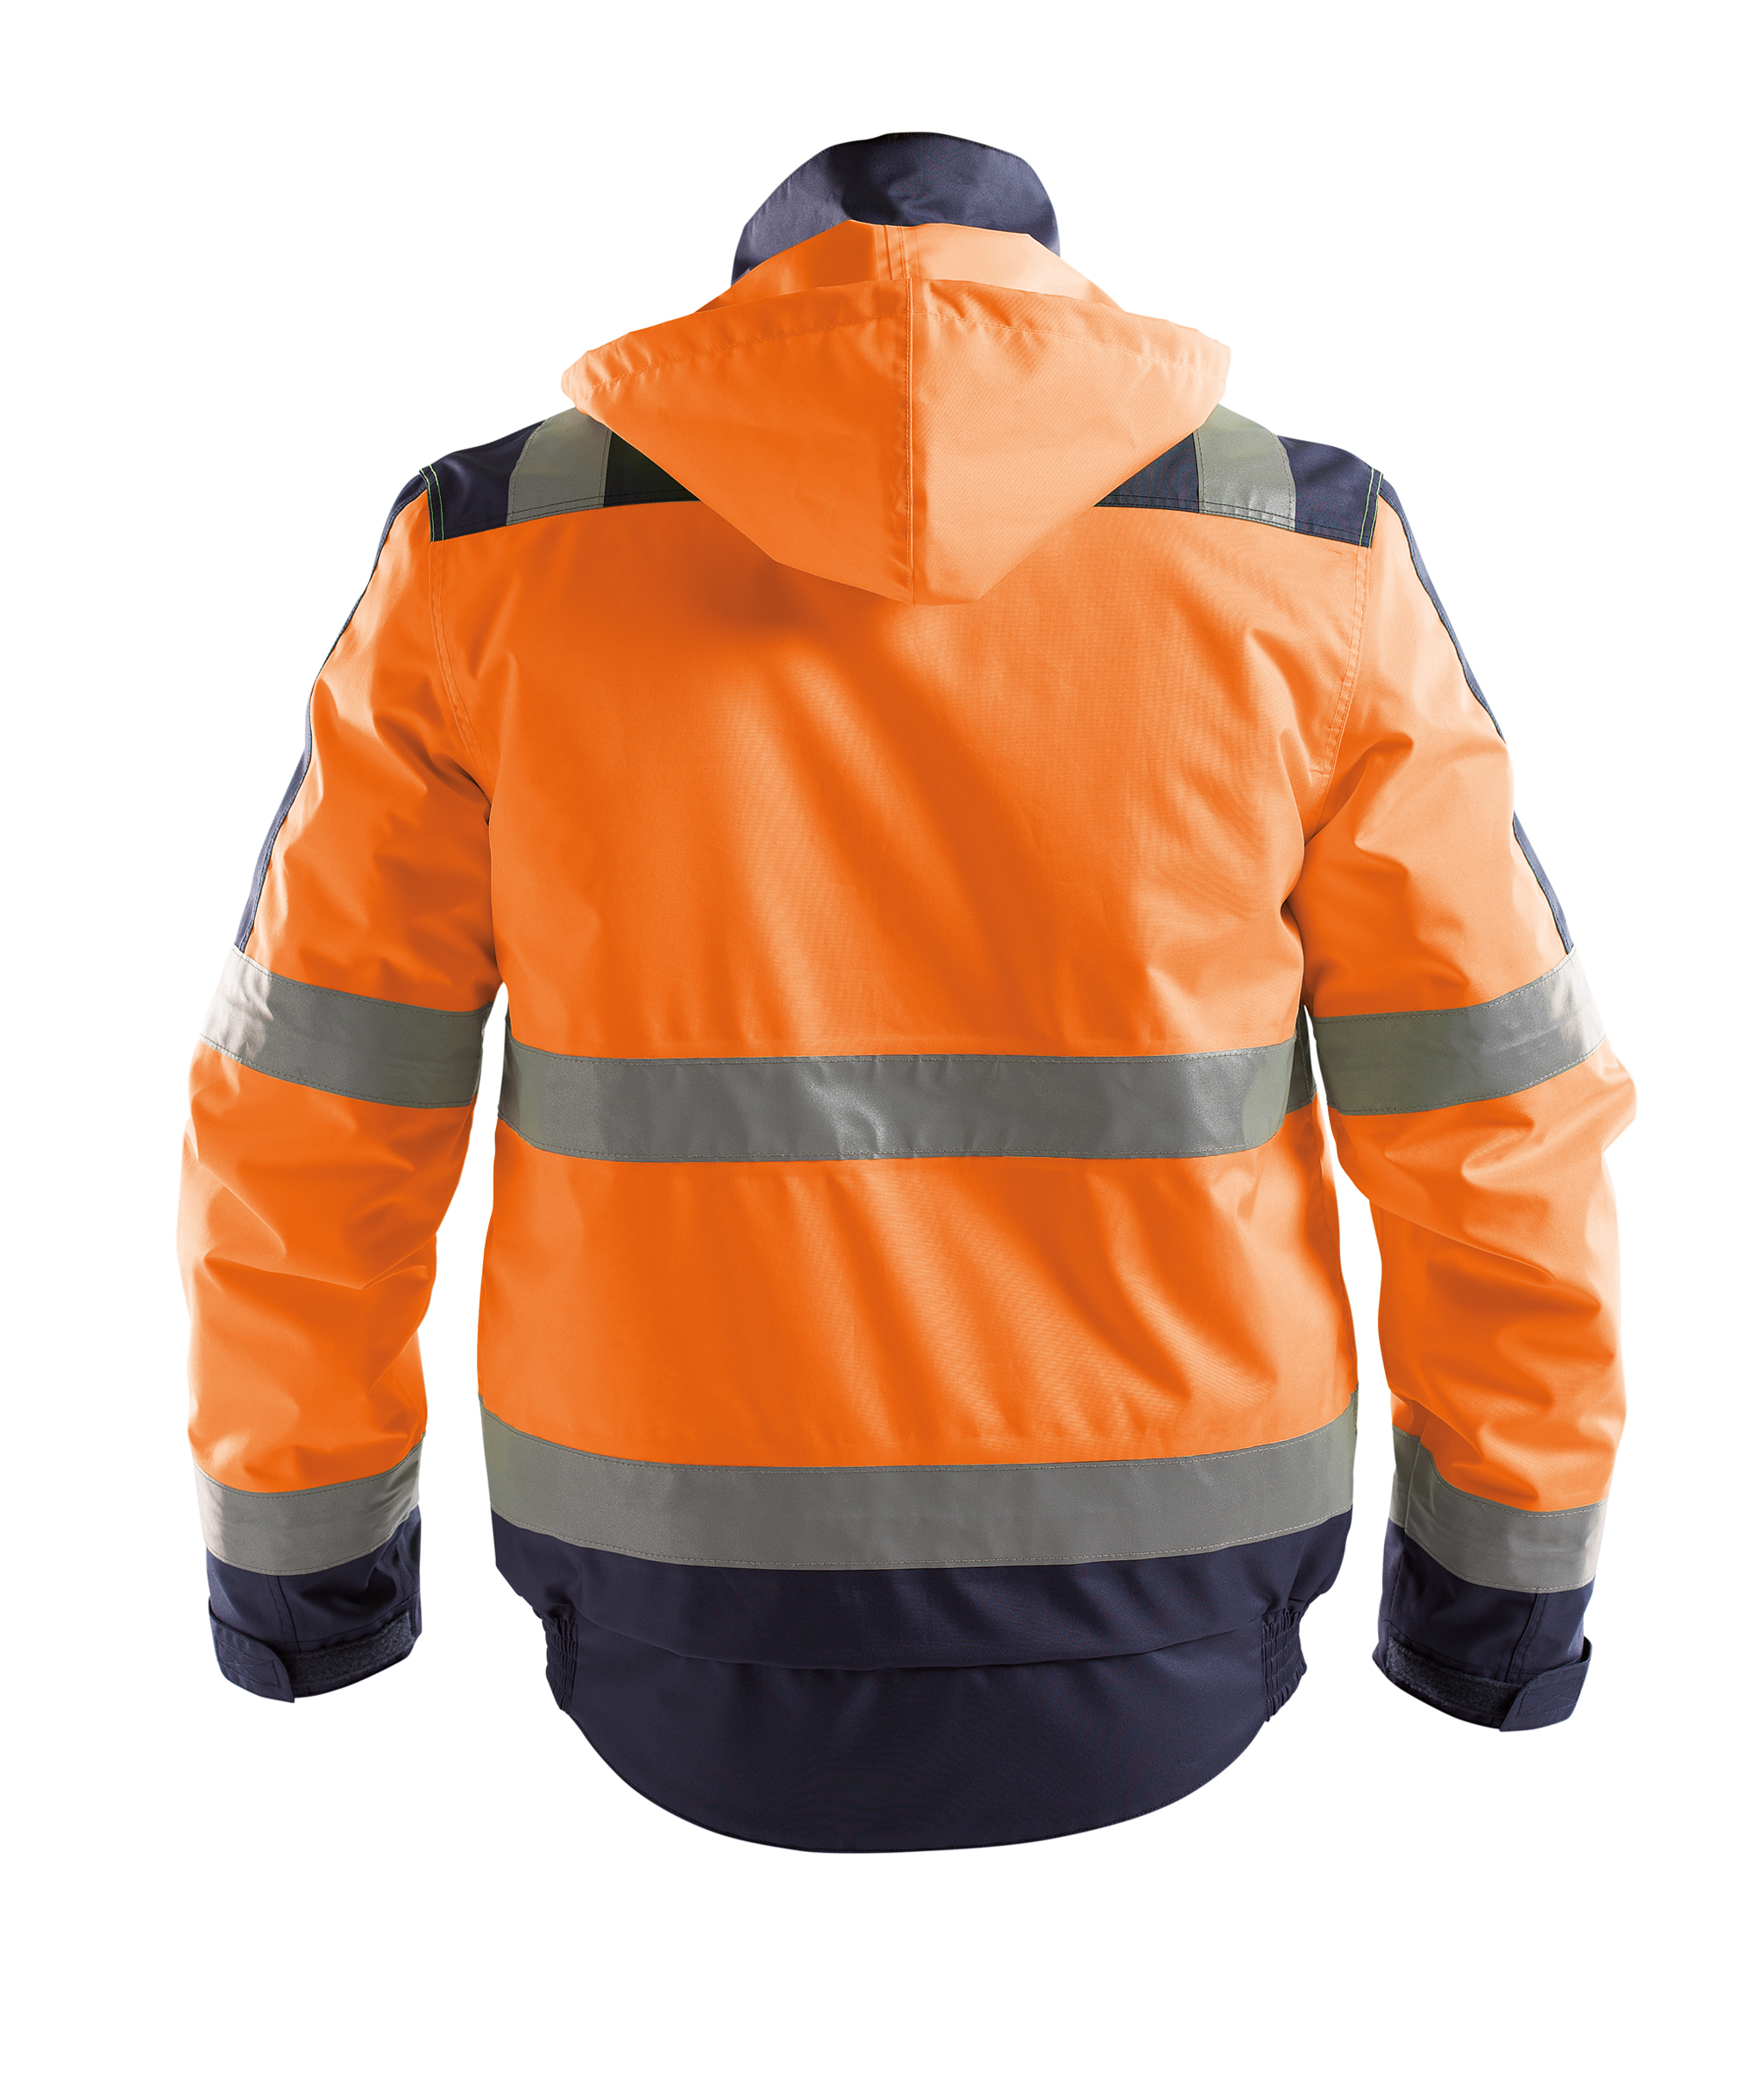 lima_high-visibility-winter-jacket_fluo-orange-navy_back.jpg